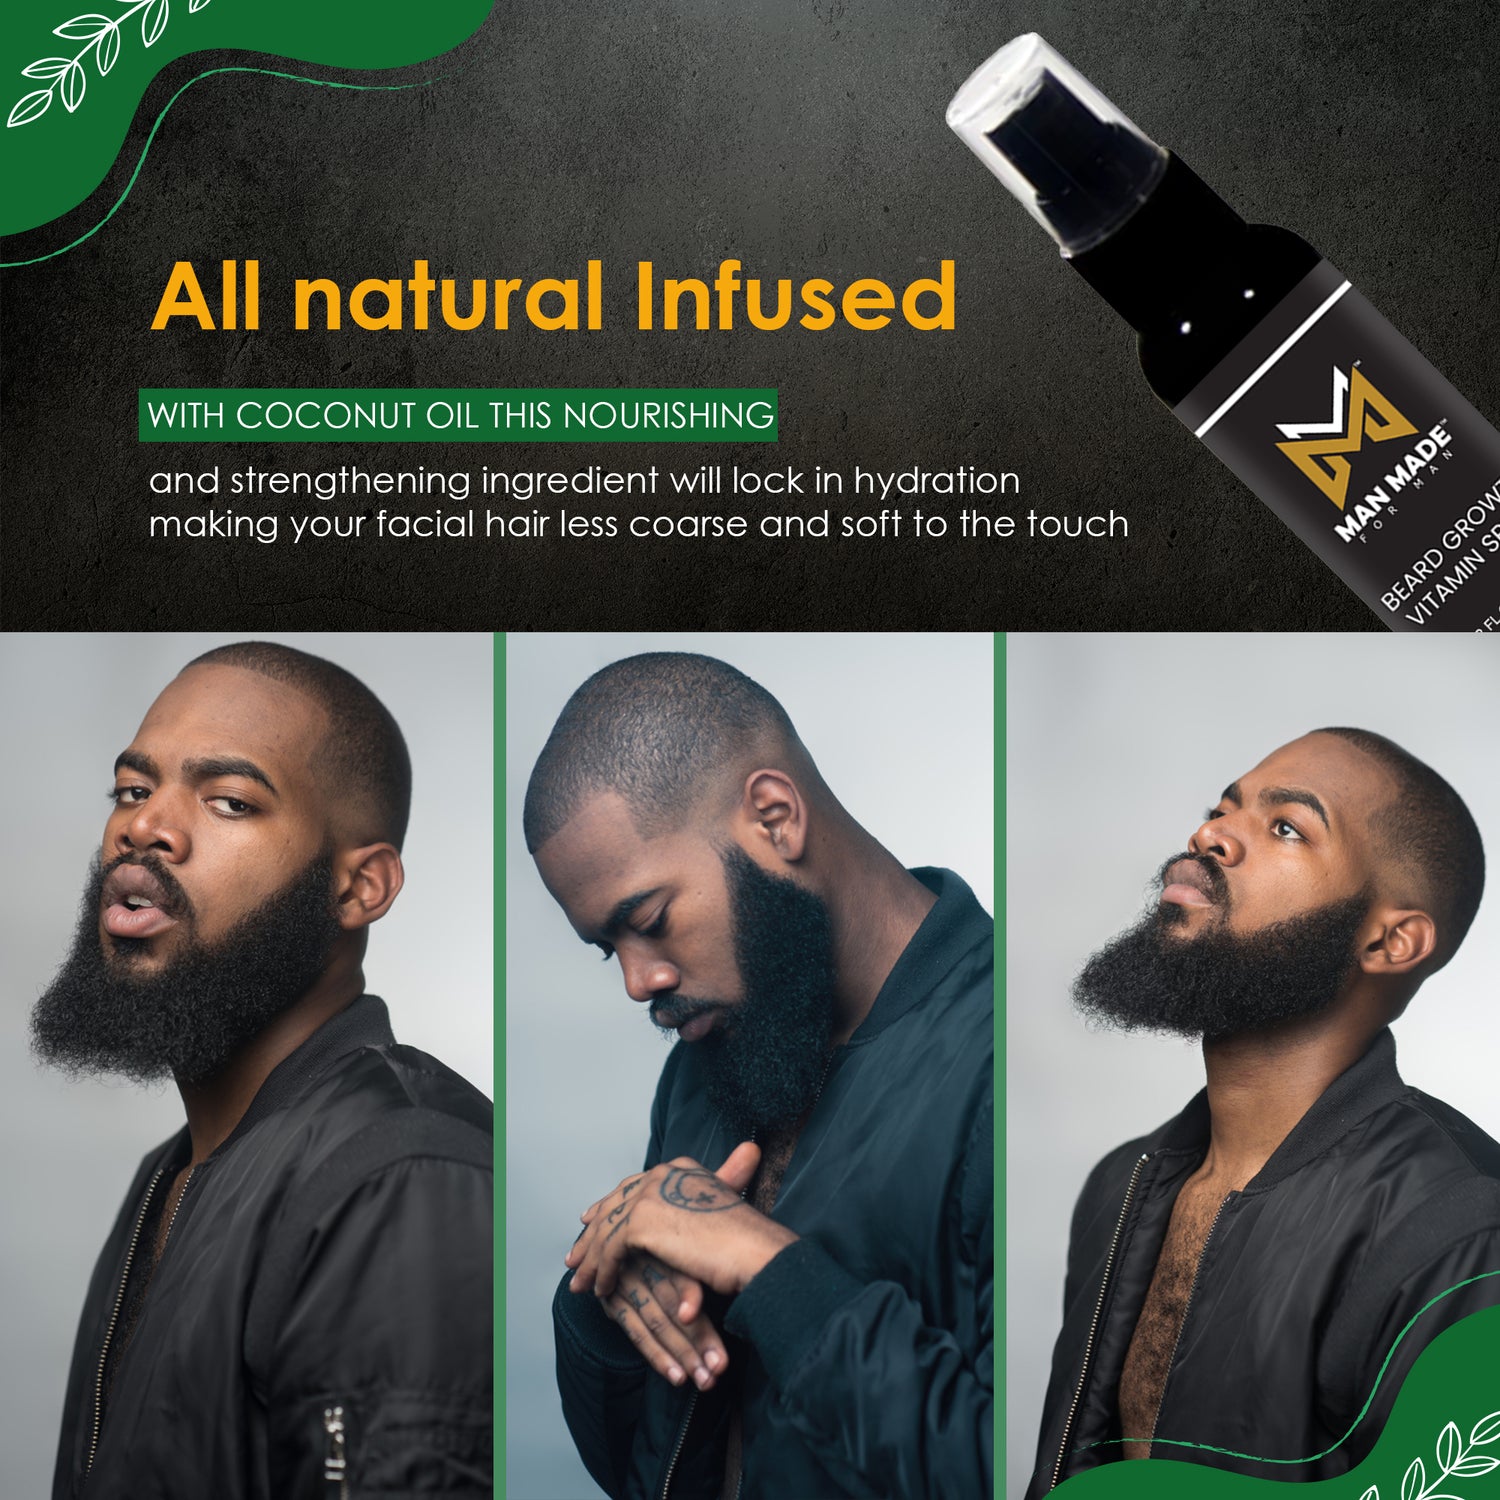 Man Made for Man Beard Growth Vitamin Spray (2 fl oz)